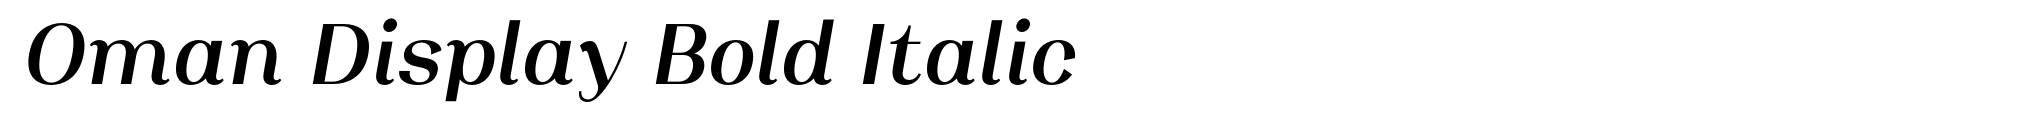 Oman Display Bold Italic image